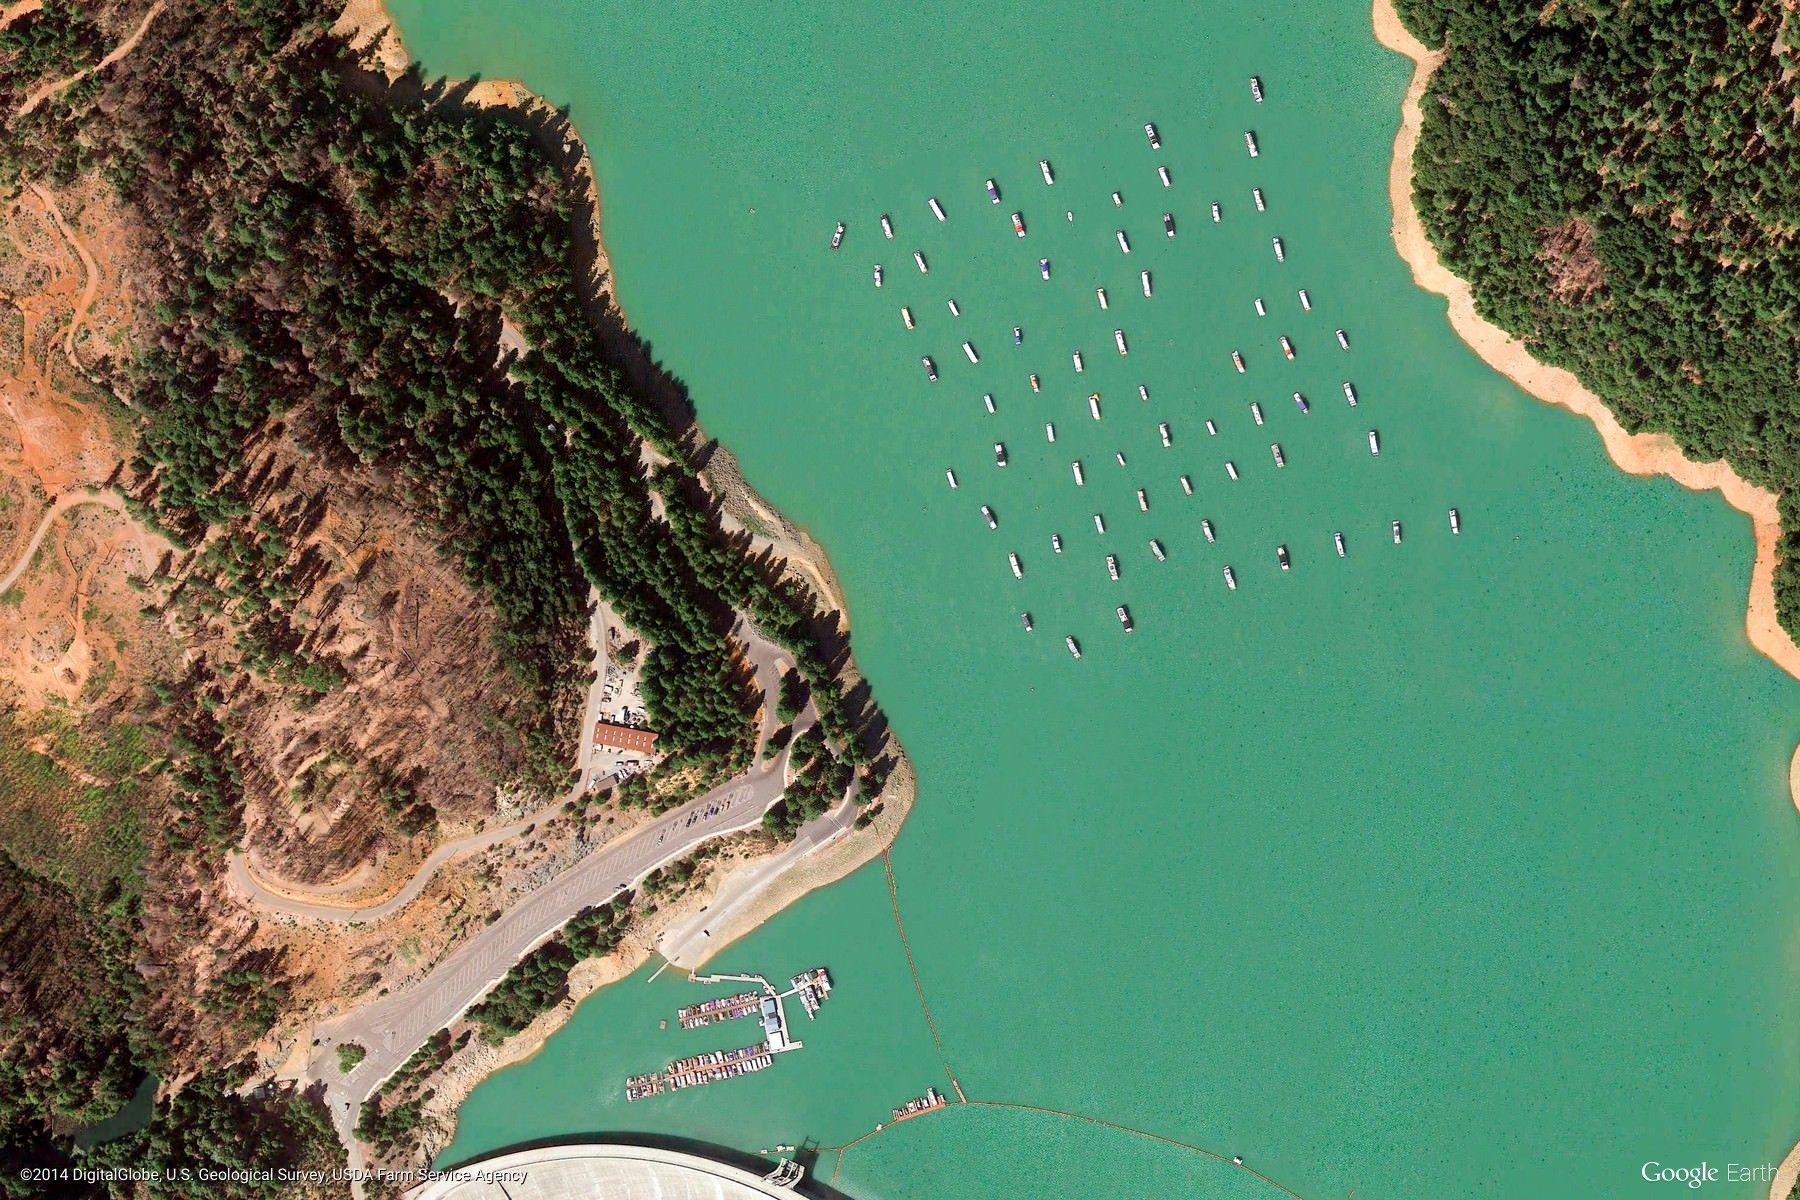 Google Earth Wallpaper: Day 1 31